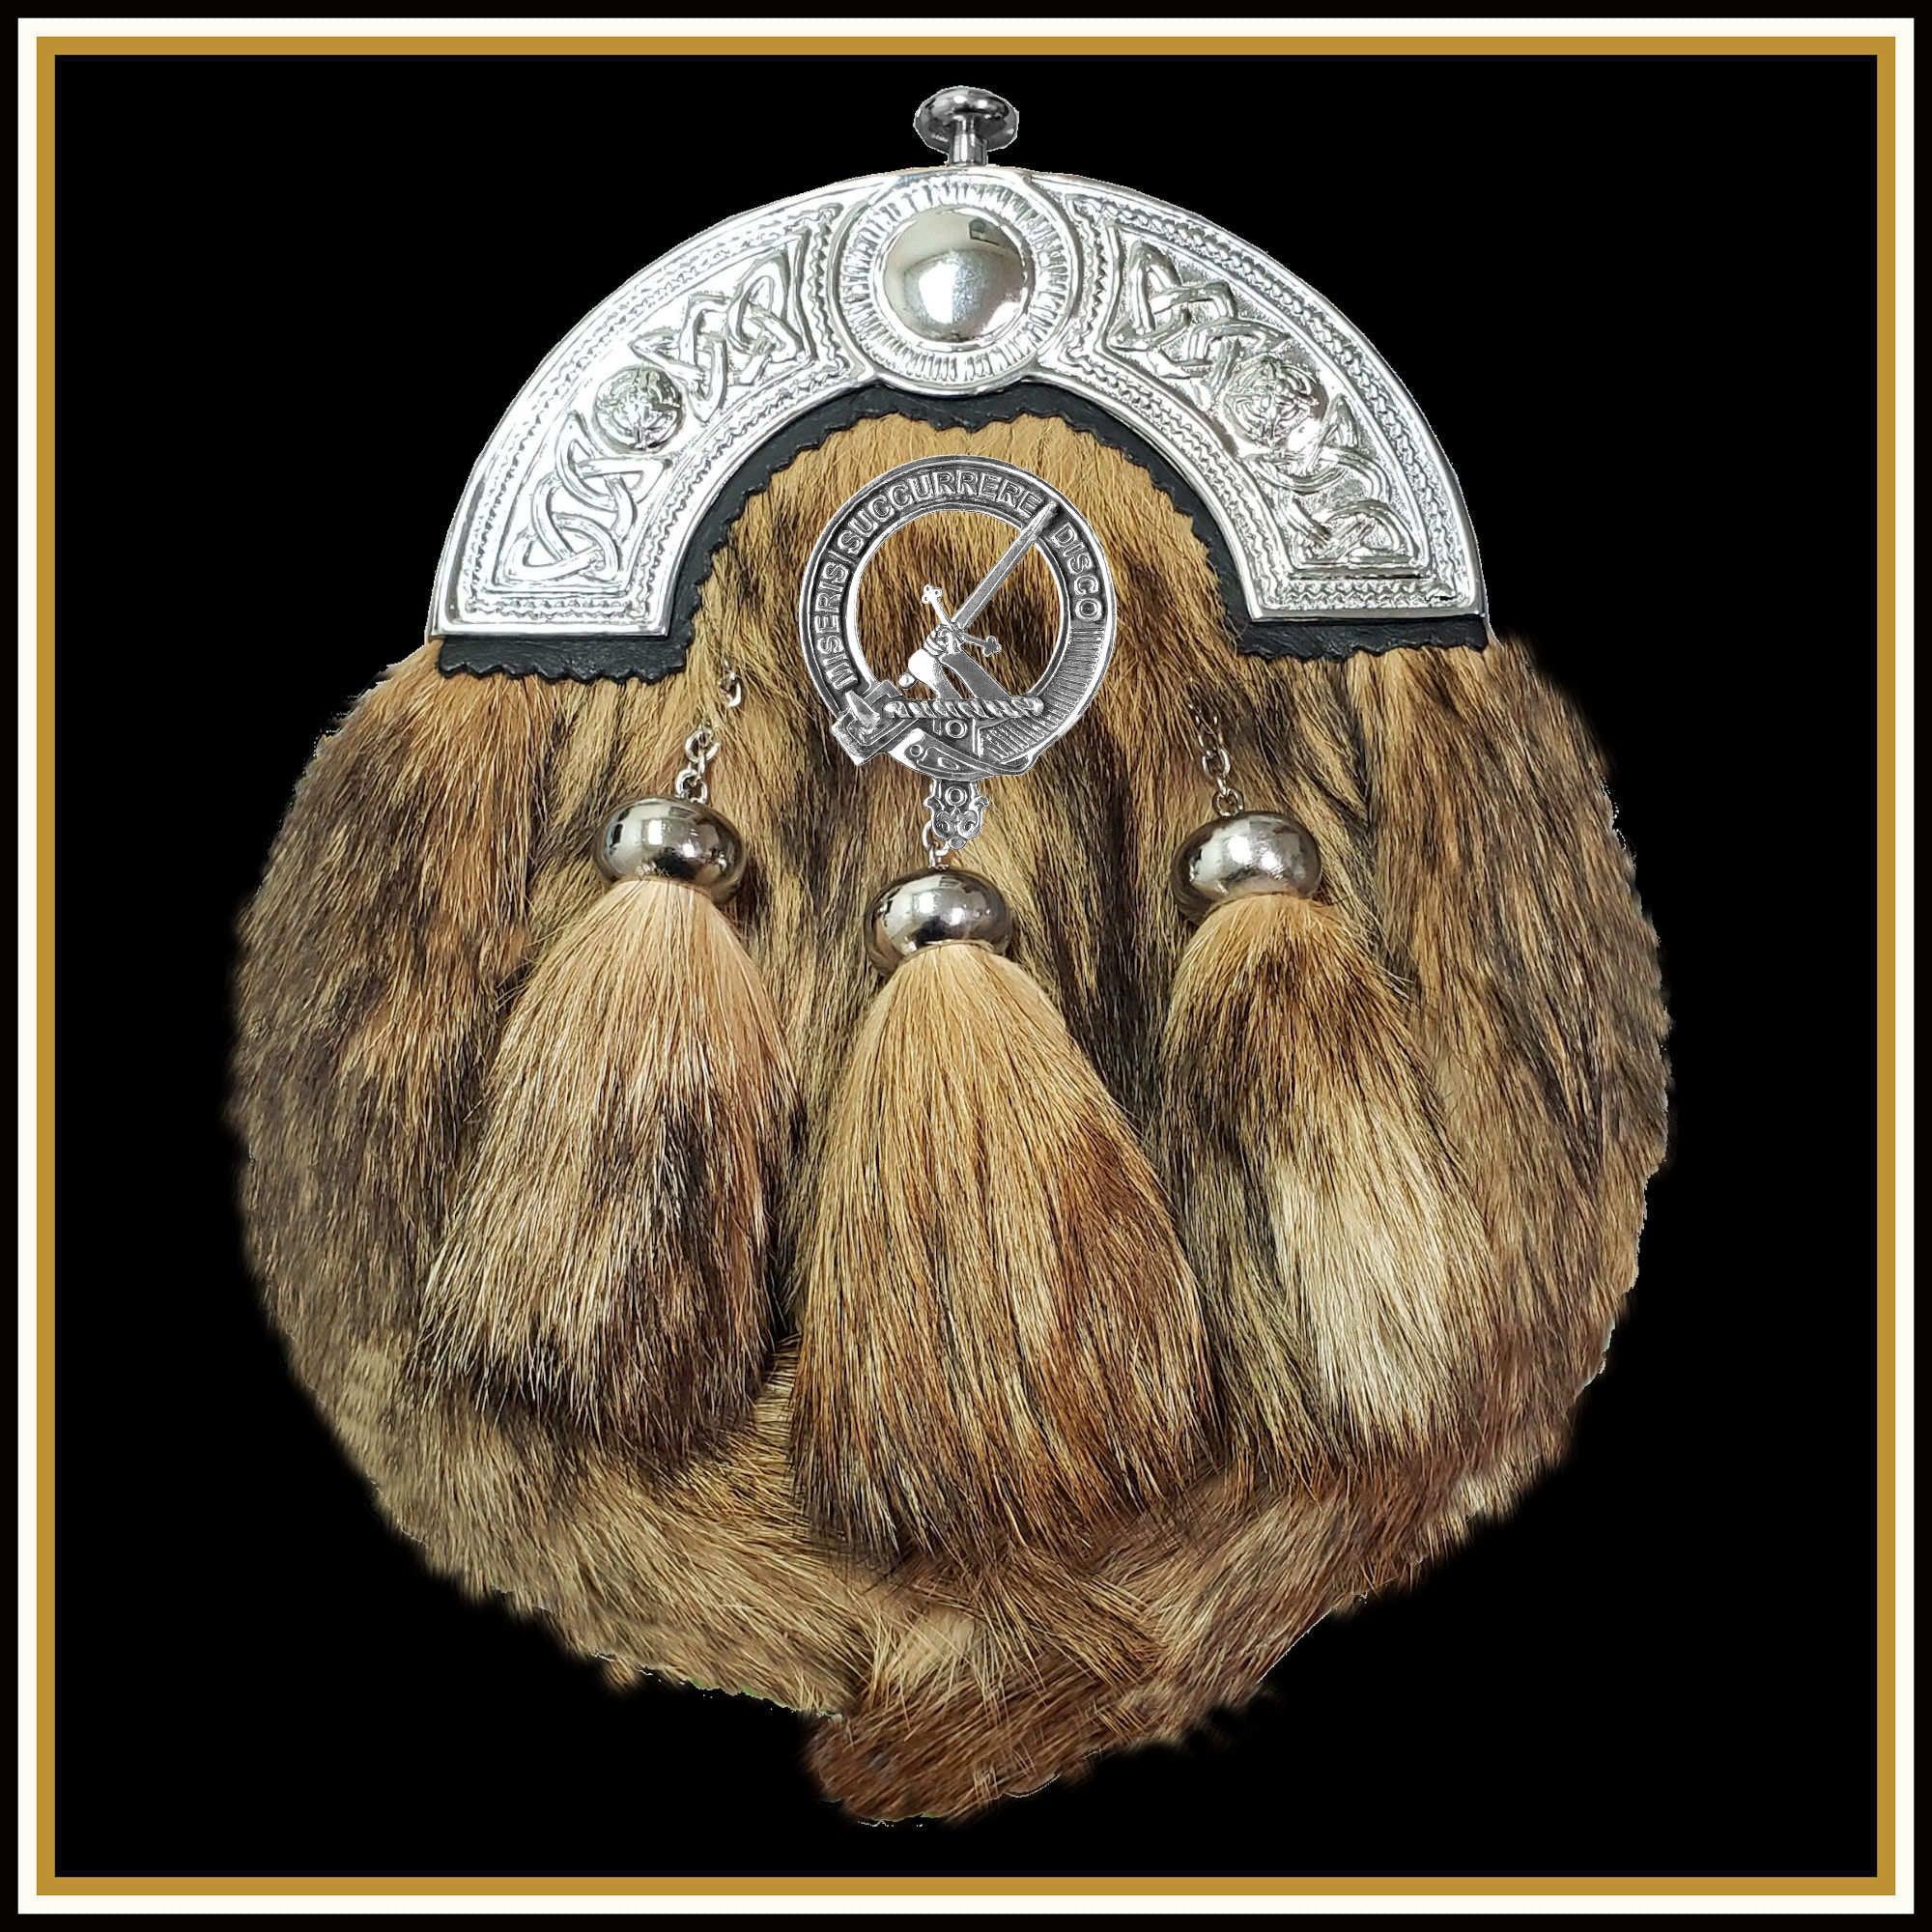 MacMillan Scottish Clan Crest Badge Dress Fur Sporran